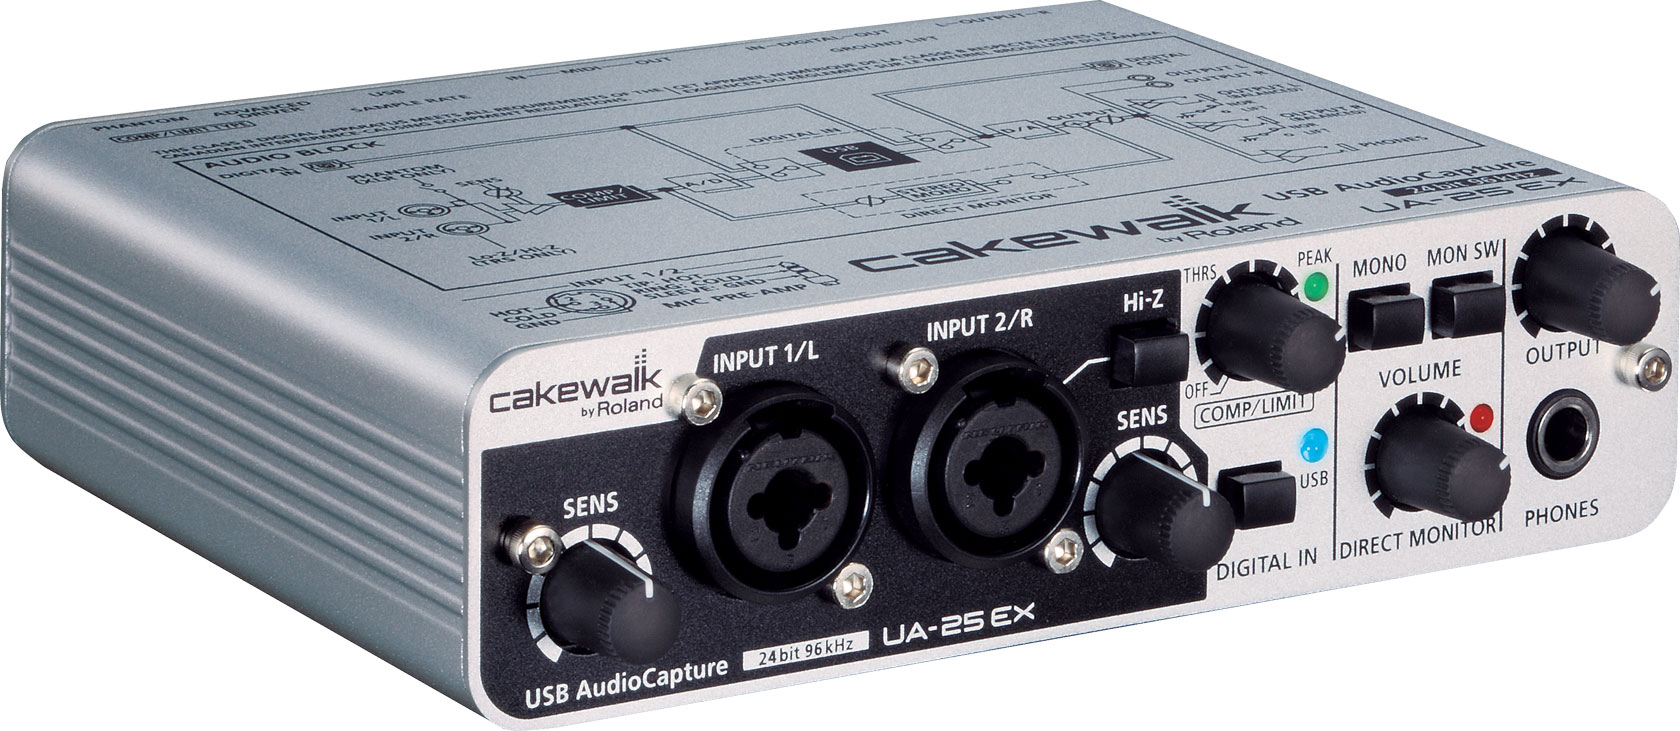 EDIROL 24-bit USB Audio Capture UA-25EXCW-